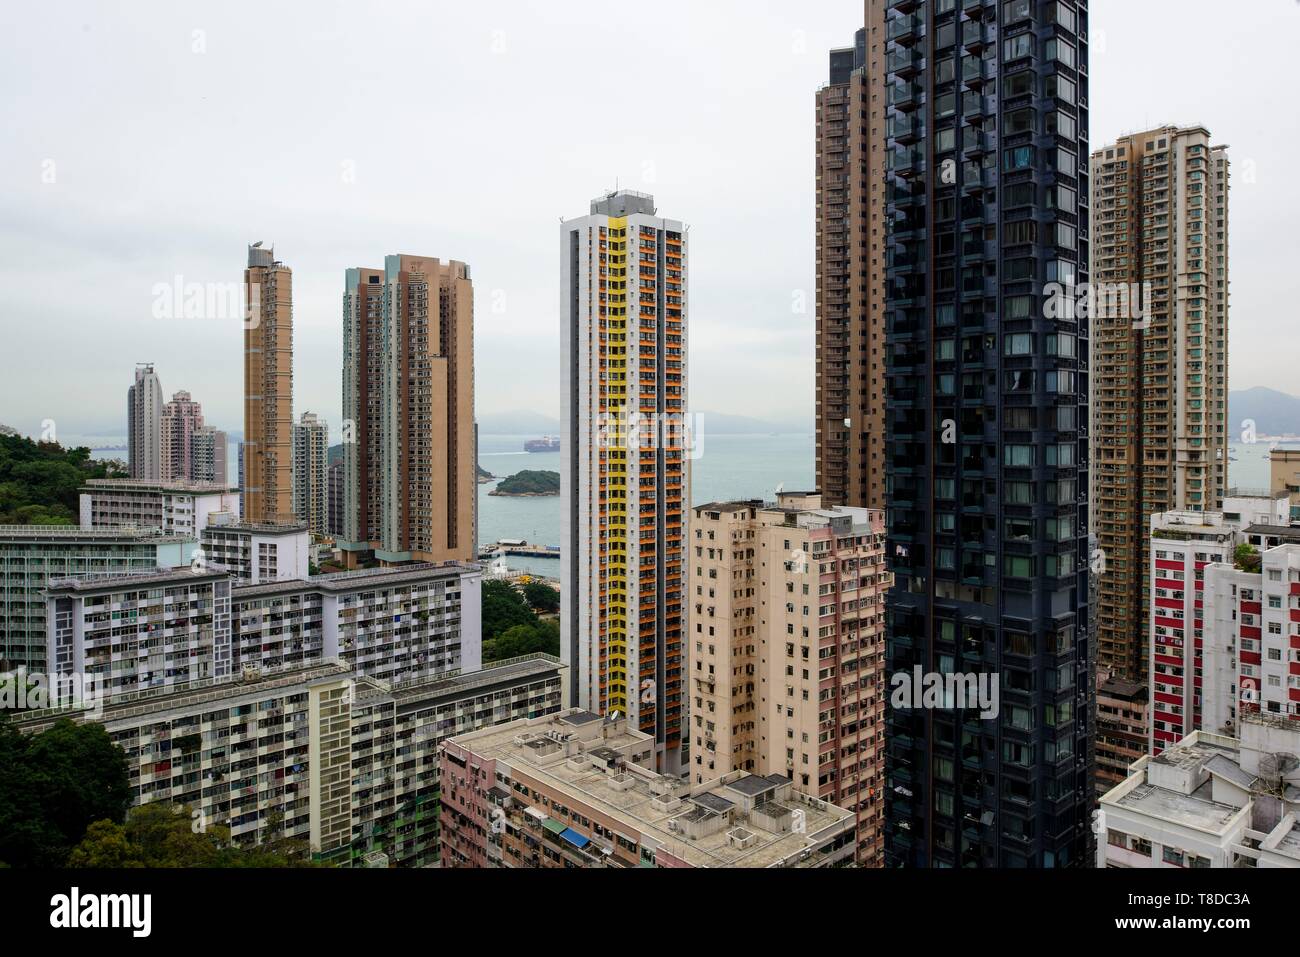 China, Hong Kong, Kennedy town, residential buildings at Hong Kong island's Kennedy town Stock Photo